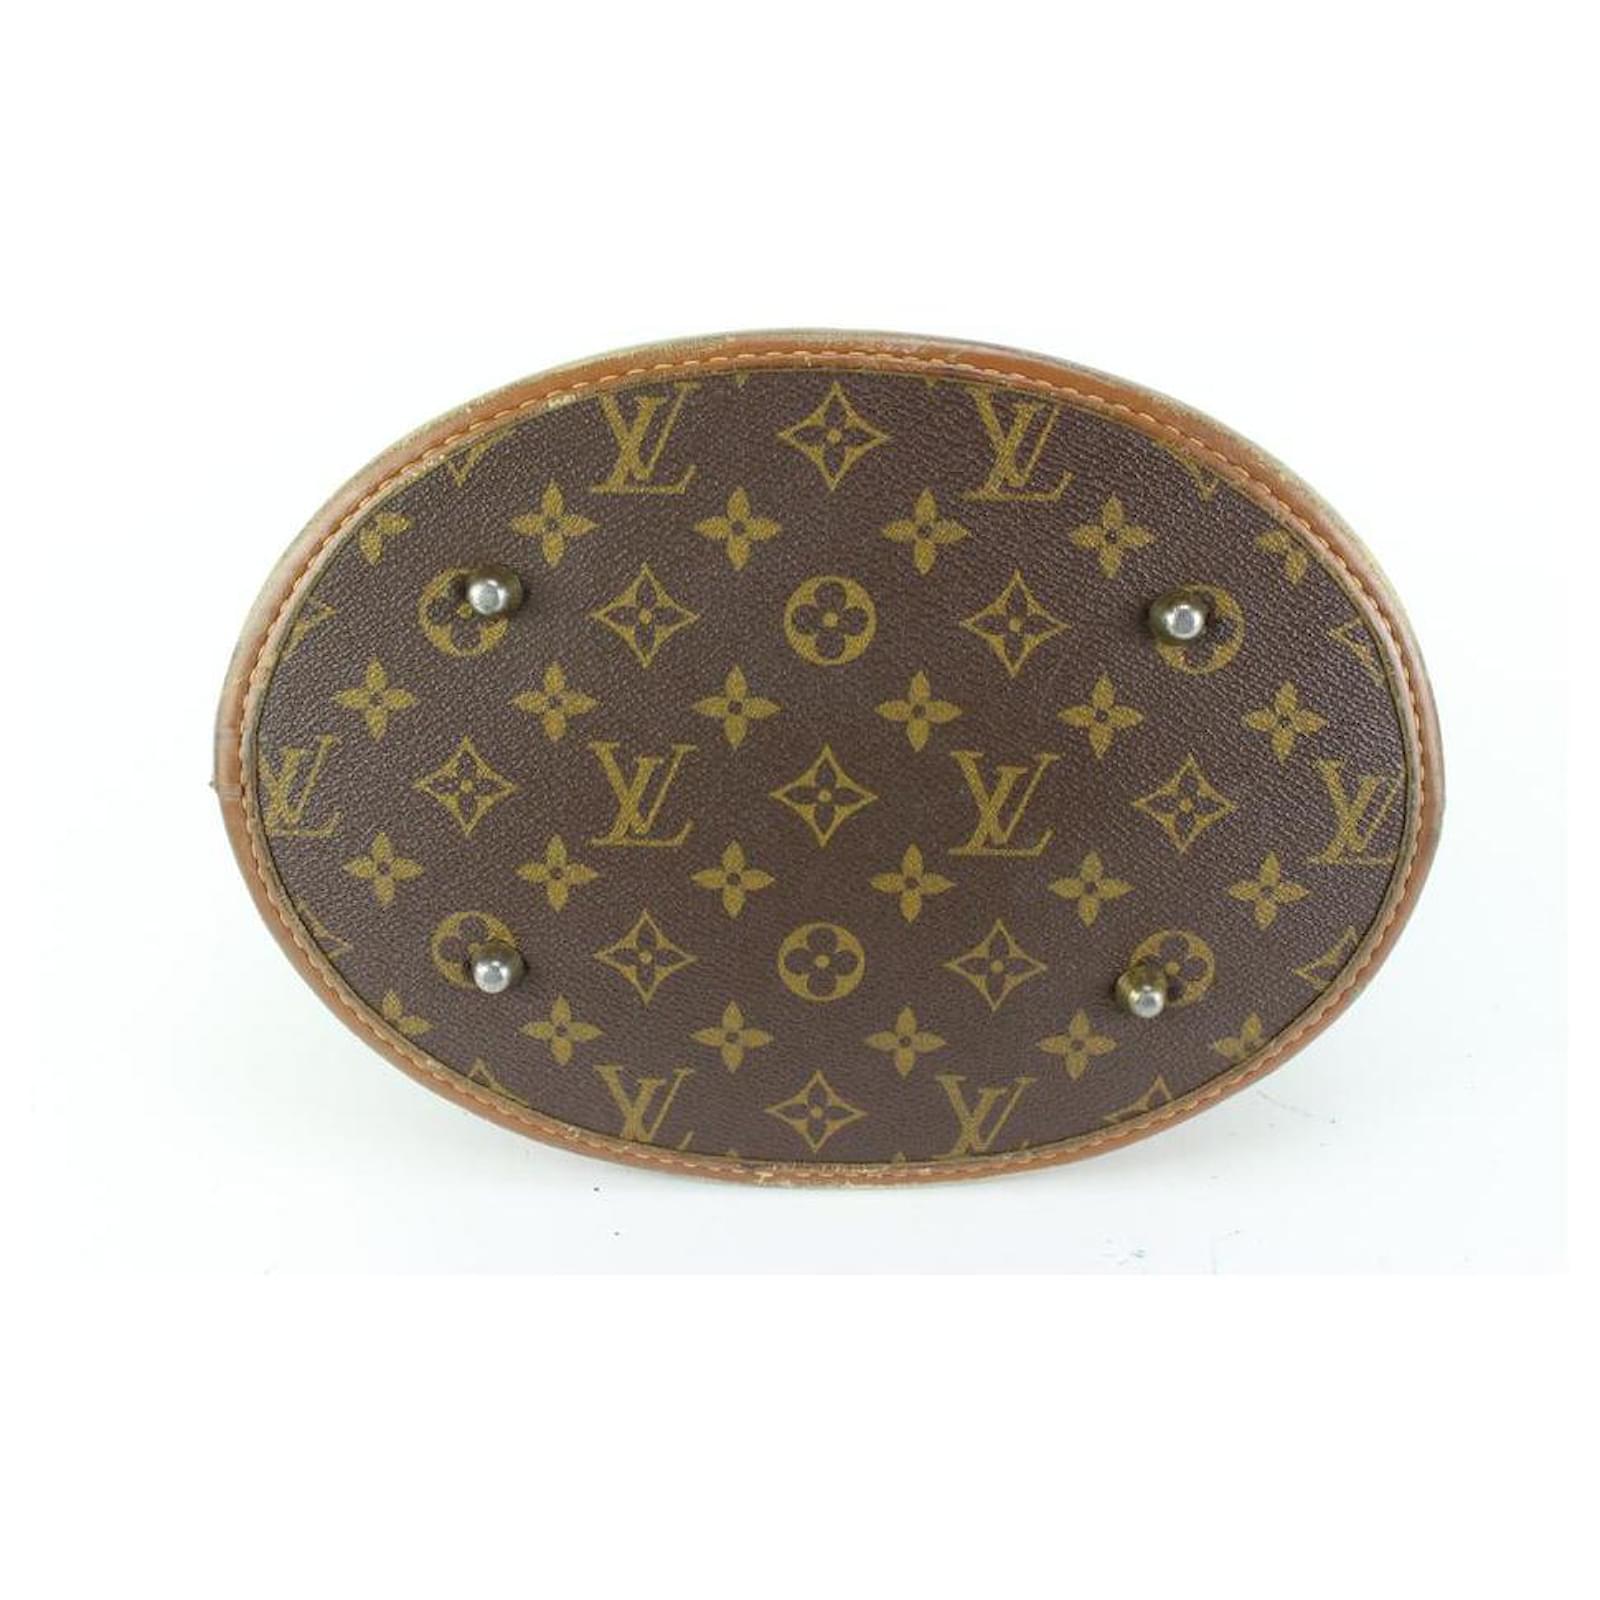 Louis Vuitton, Bags, Louis Vuitton Vintage French Co Bucket Bag Gm